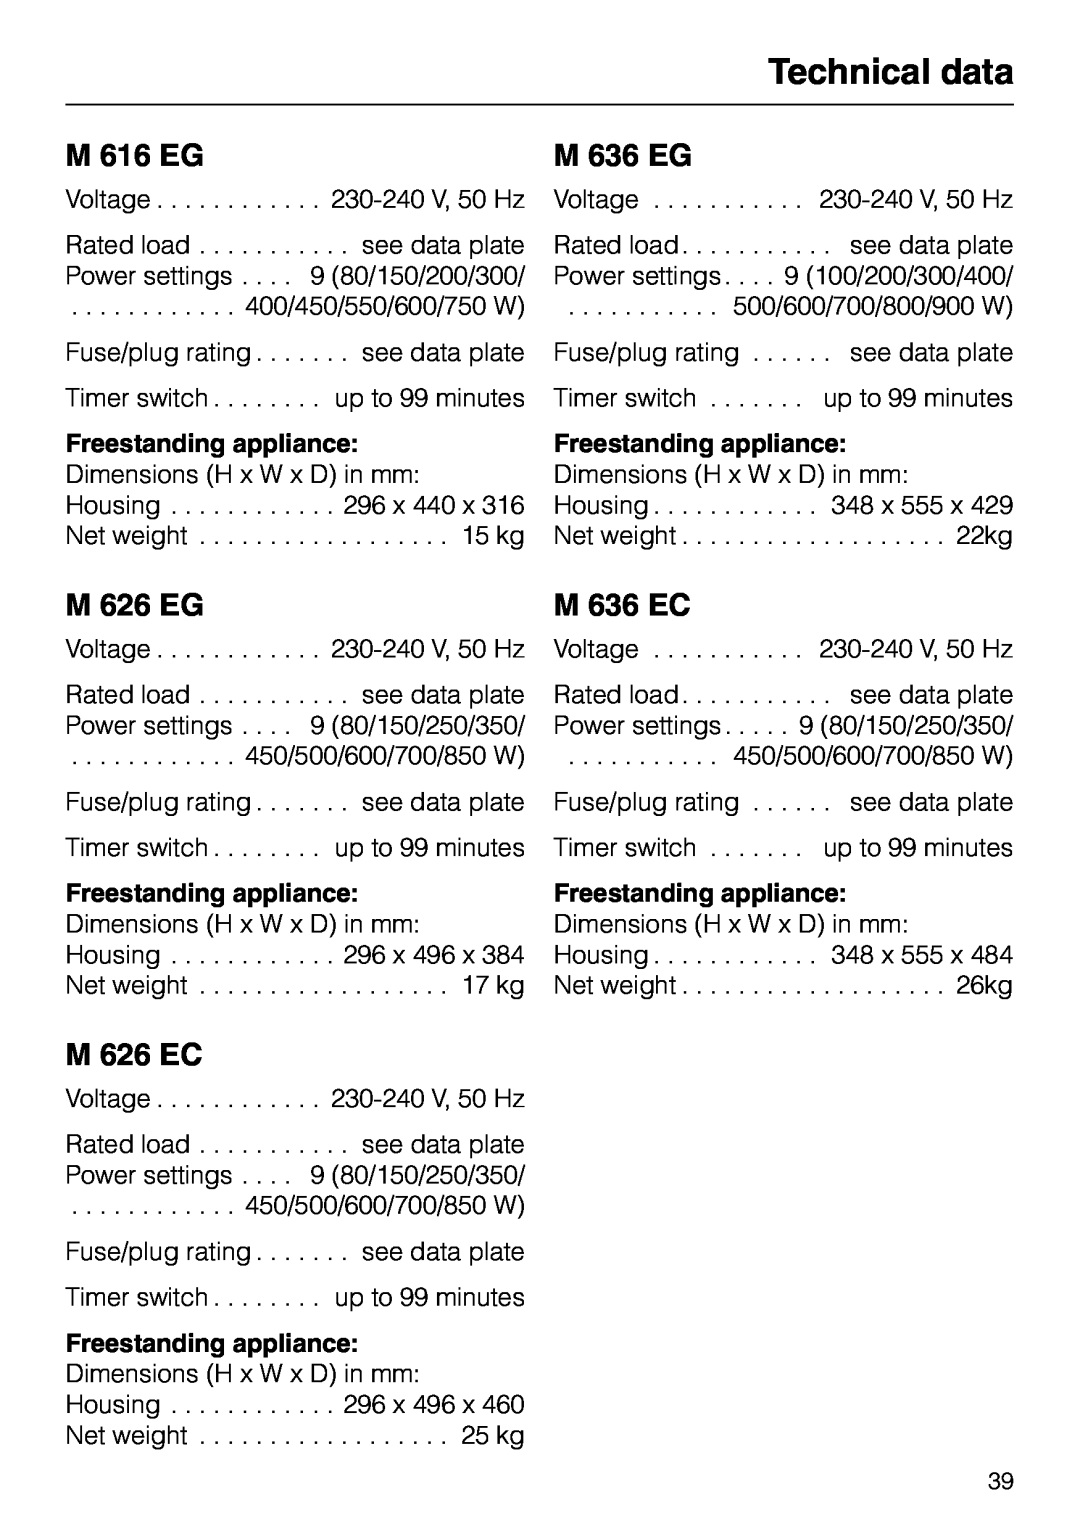 Miele M 626 EG, M636EC manual Technical data, M 616 EG, M 626 EC, M 636 EG, M 636 EC 